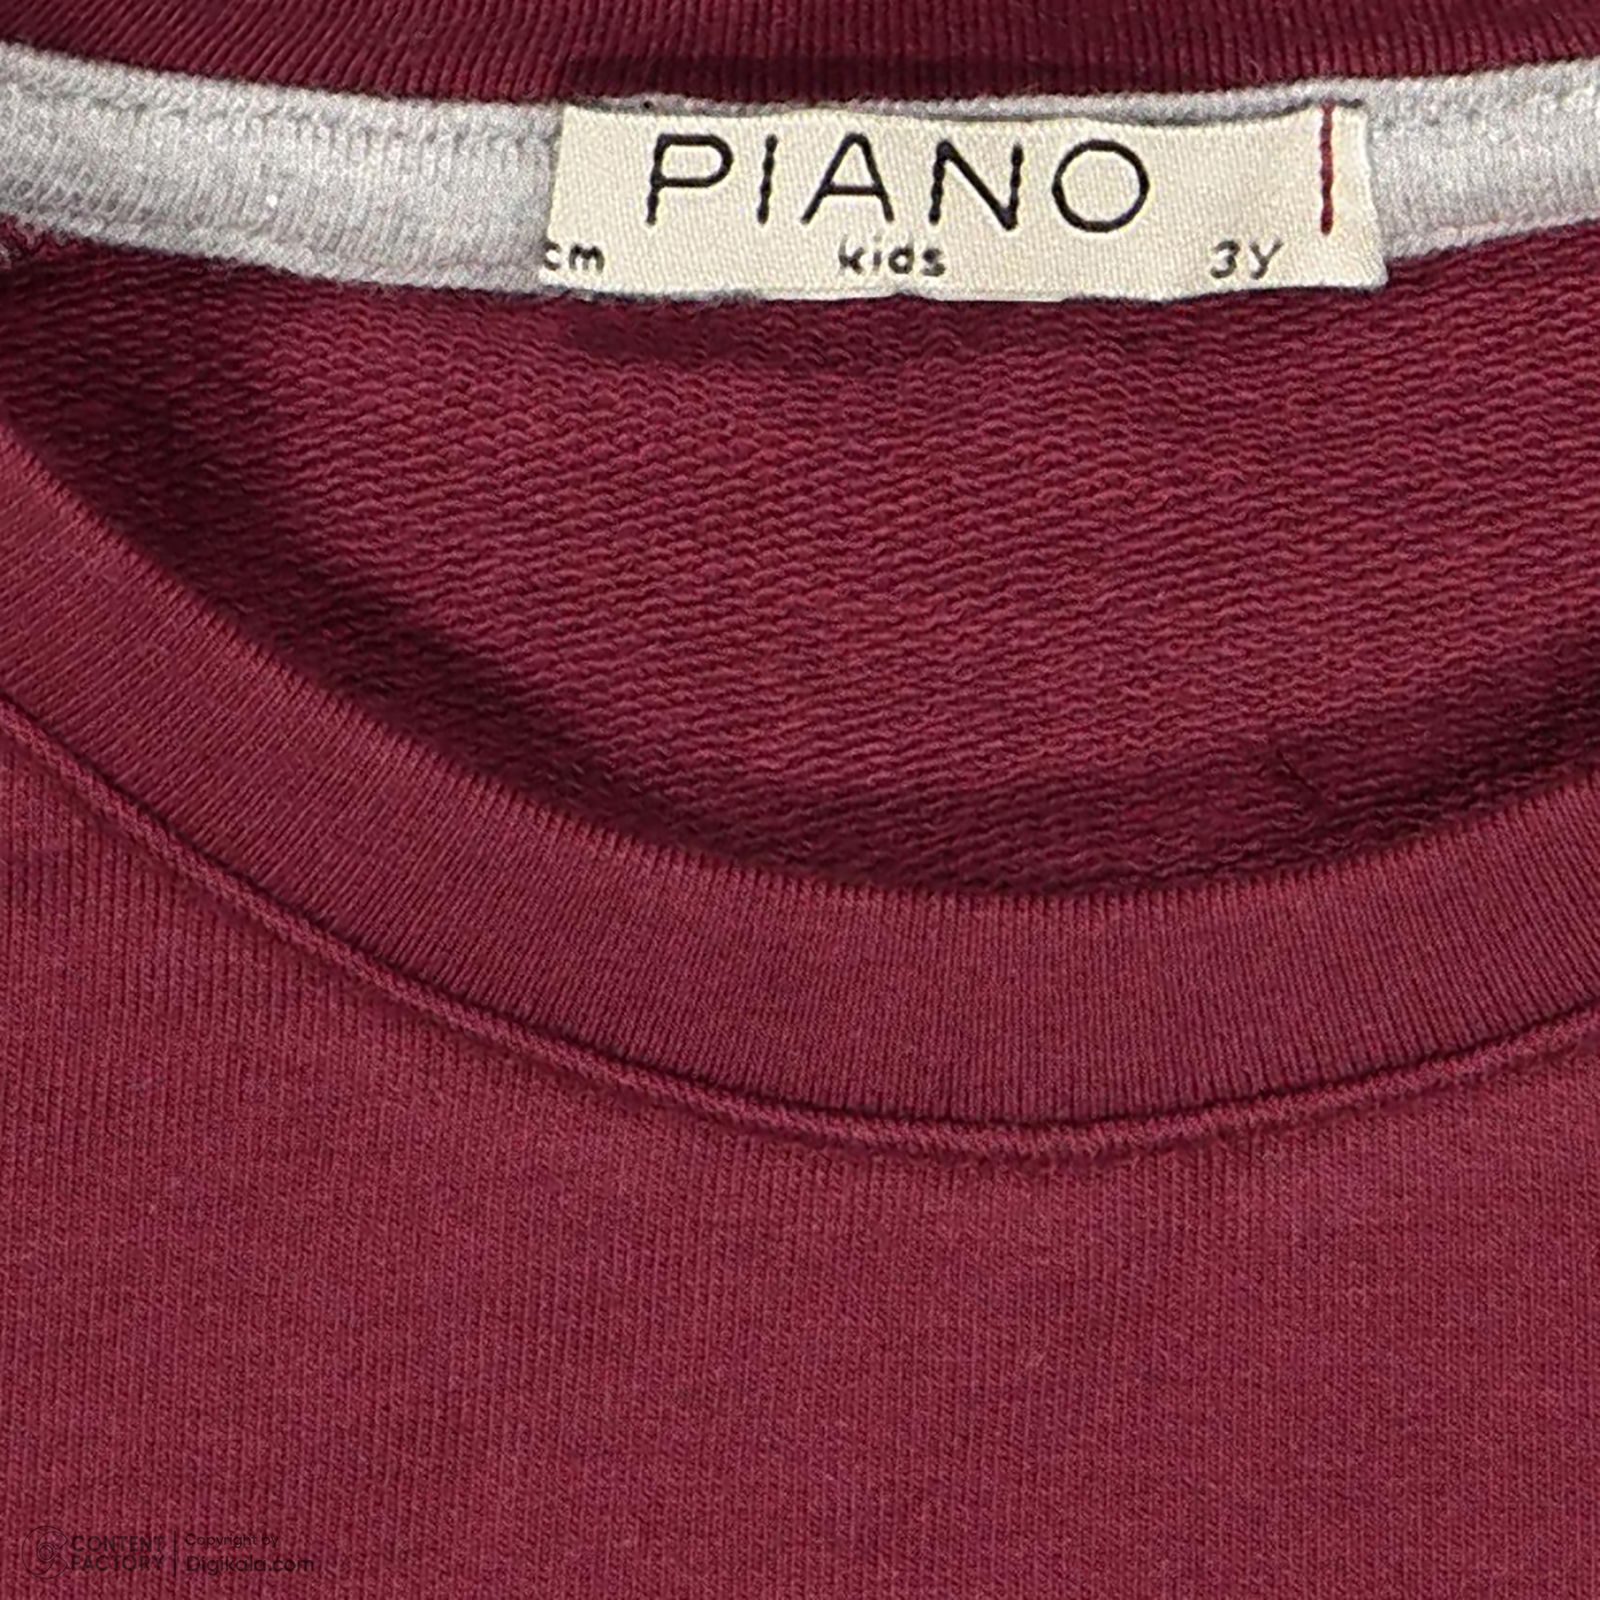 سویشرت دخترانه پیانو مدل 1644 رنگ زرشکی -  - 5